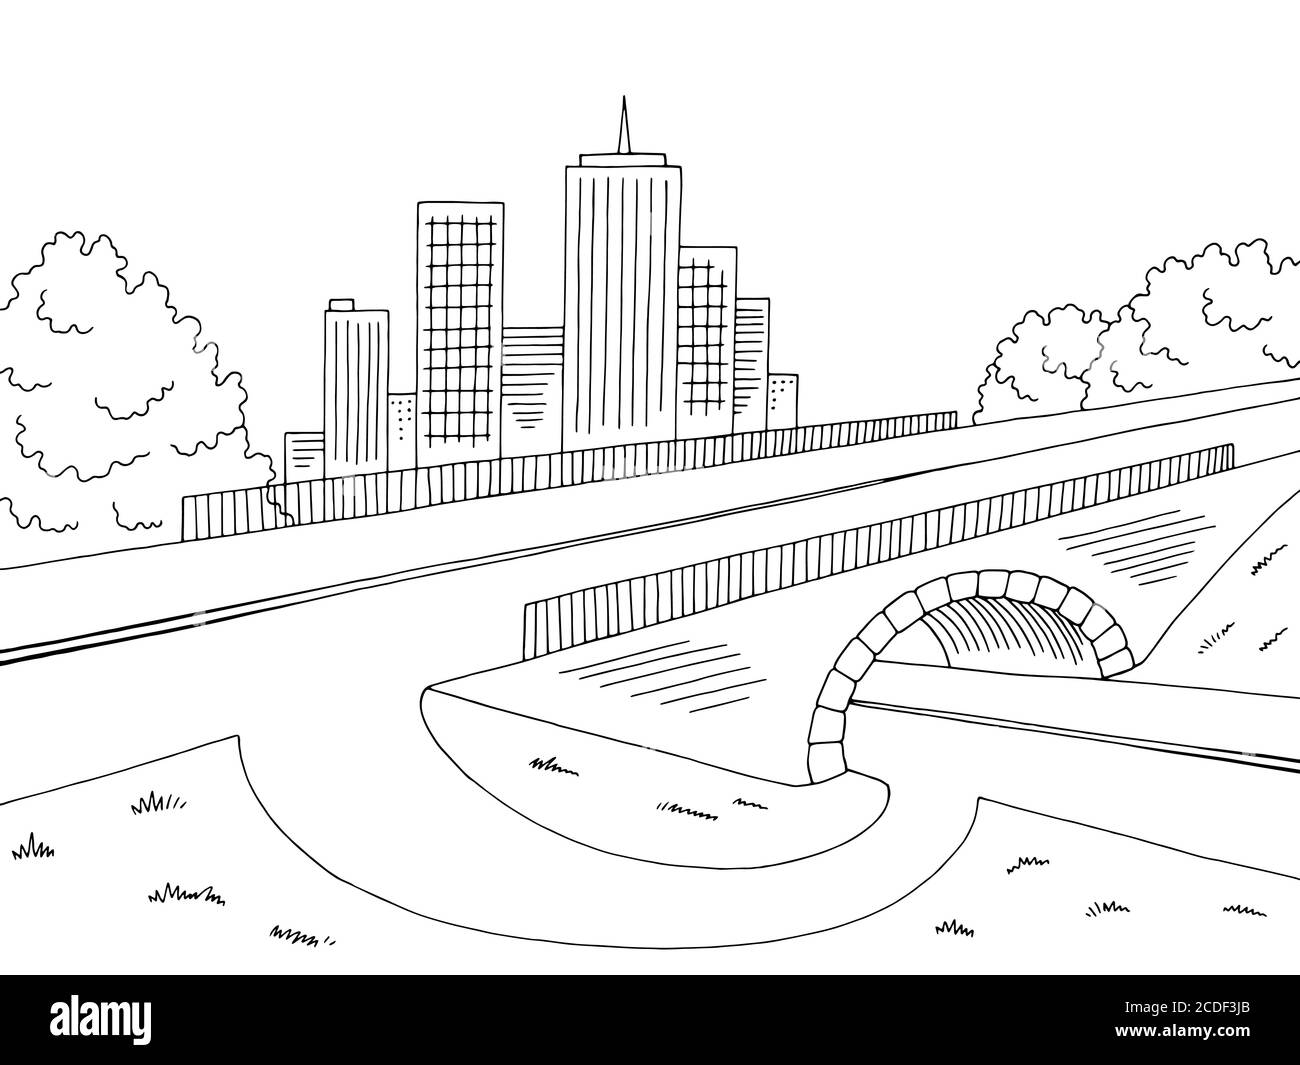 Straße Brücke Grafik schwarz weiß Landschaft Stadt Skizze Illustration Vektor Stock Vektor